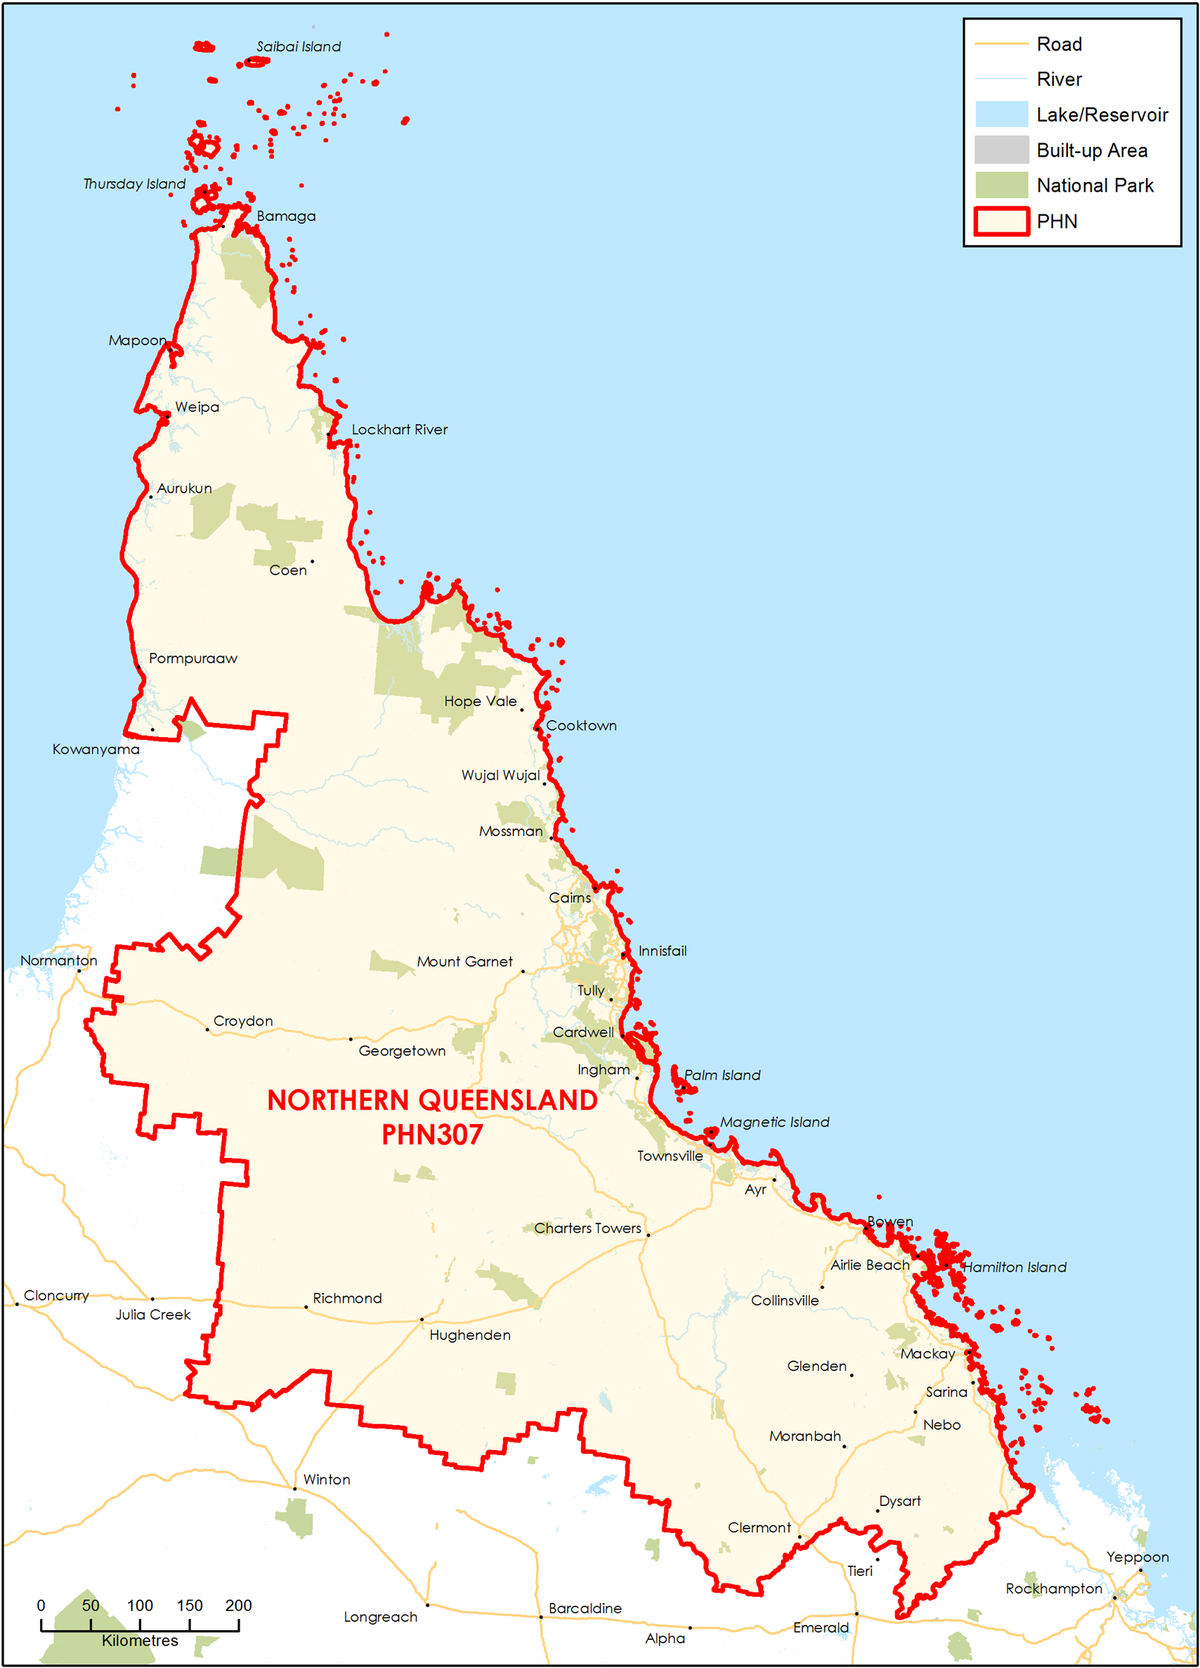 North Queensland PHN region map